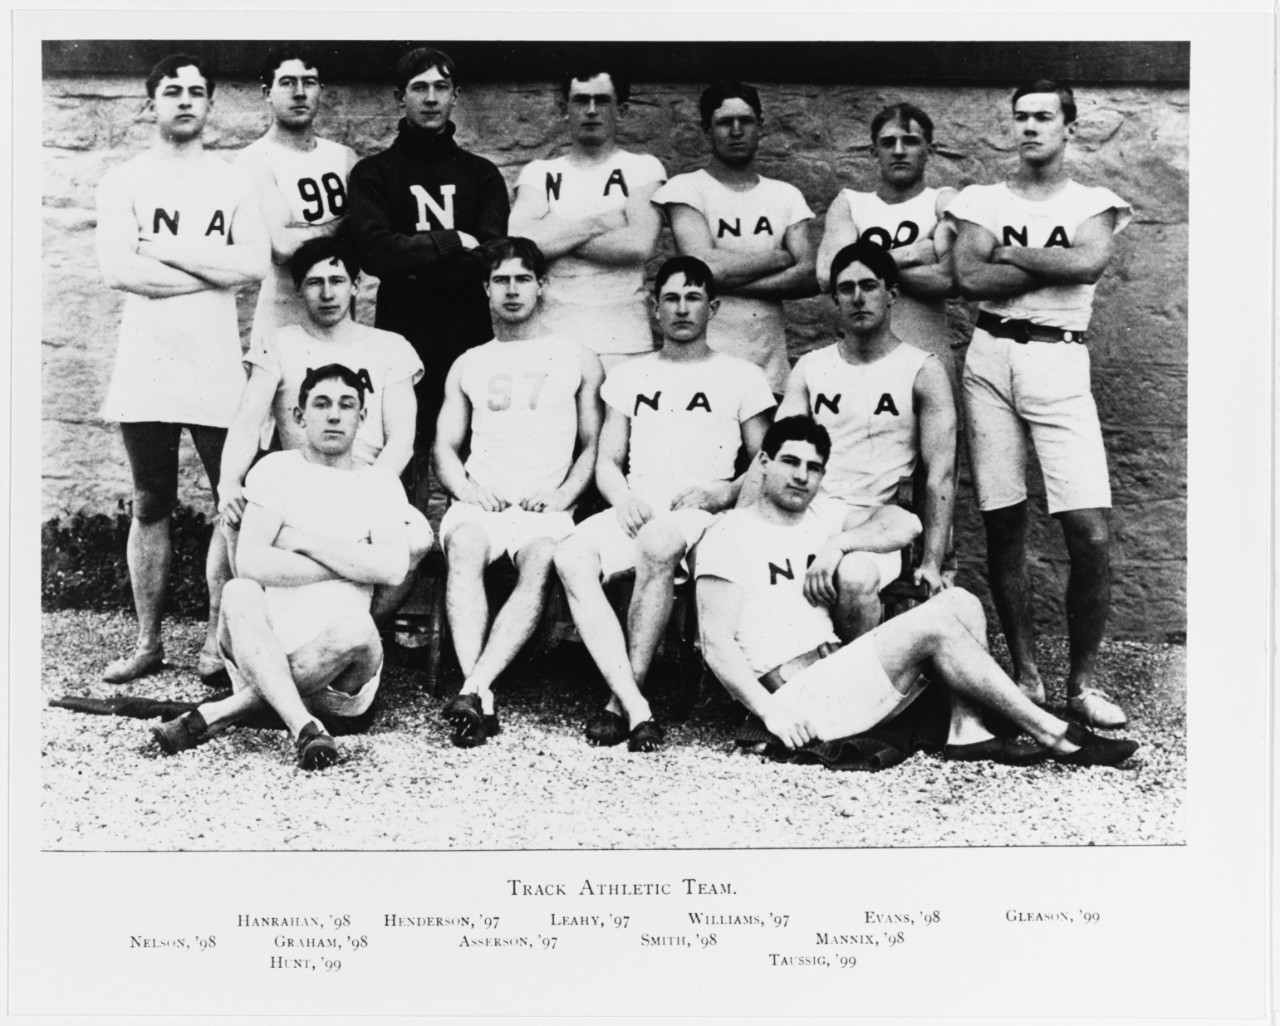 Naval Academy Track Athletic Team